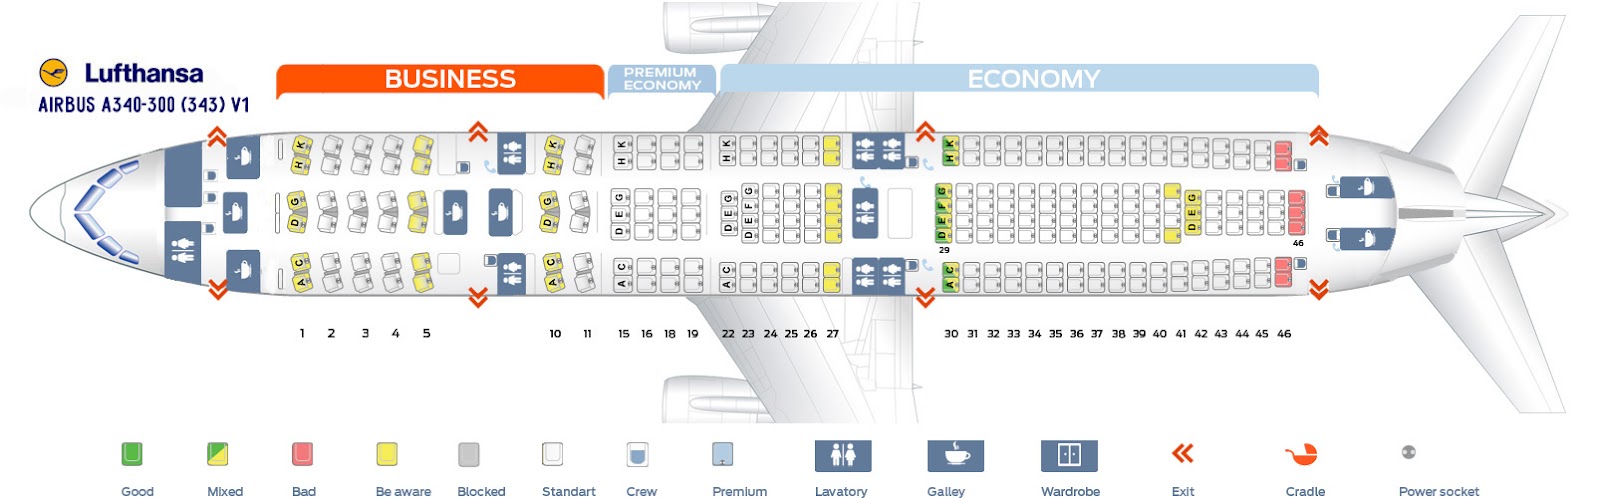 Lufthansa Seat Map (A340-300 Premium Economy Class)